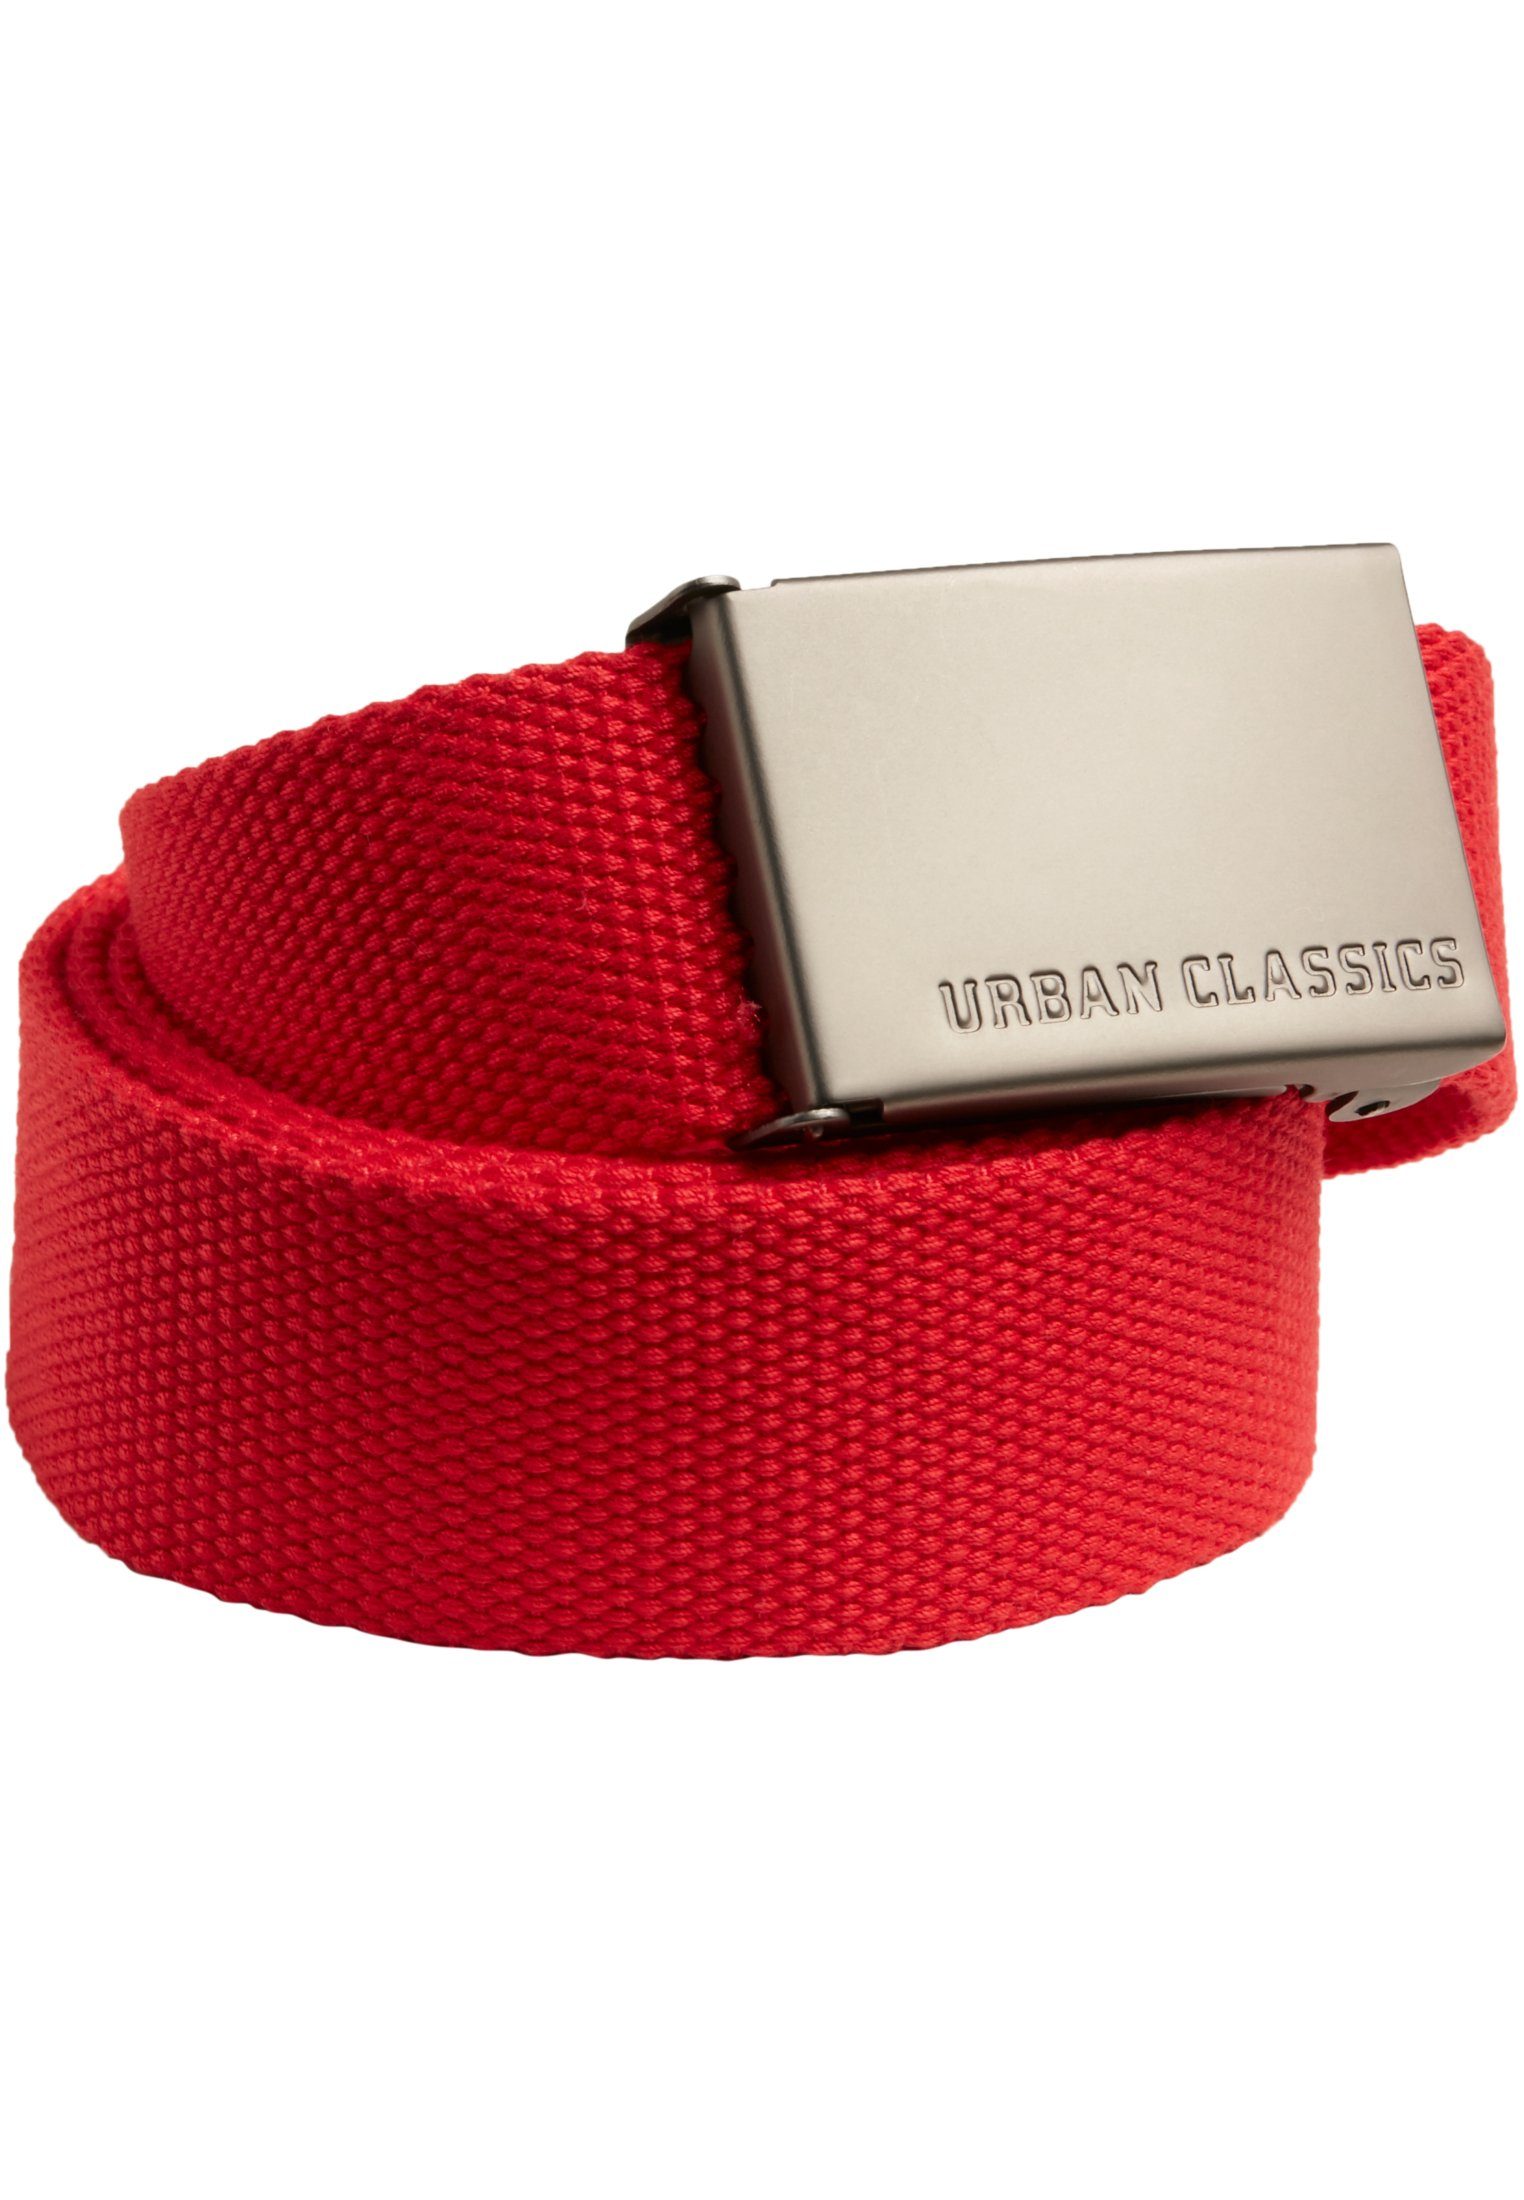 URBAN CLASSICS Hüftgürtel Canvas red Belts Accessoires